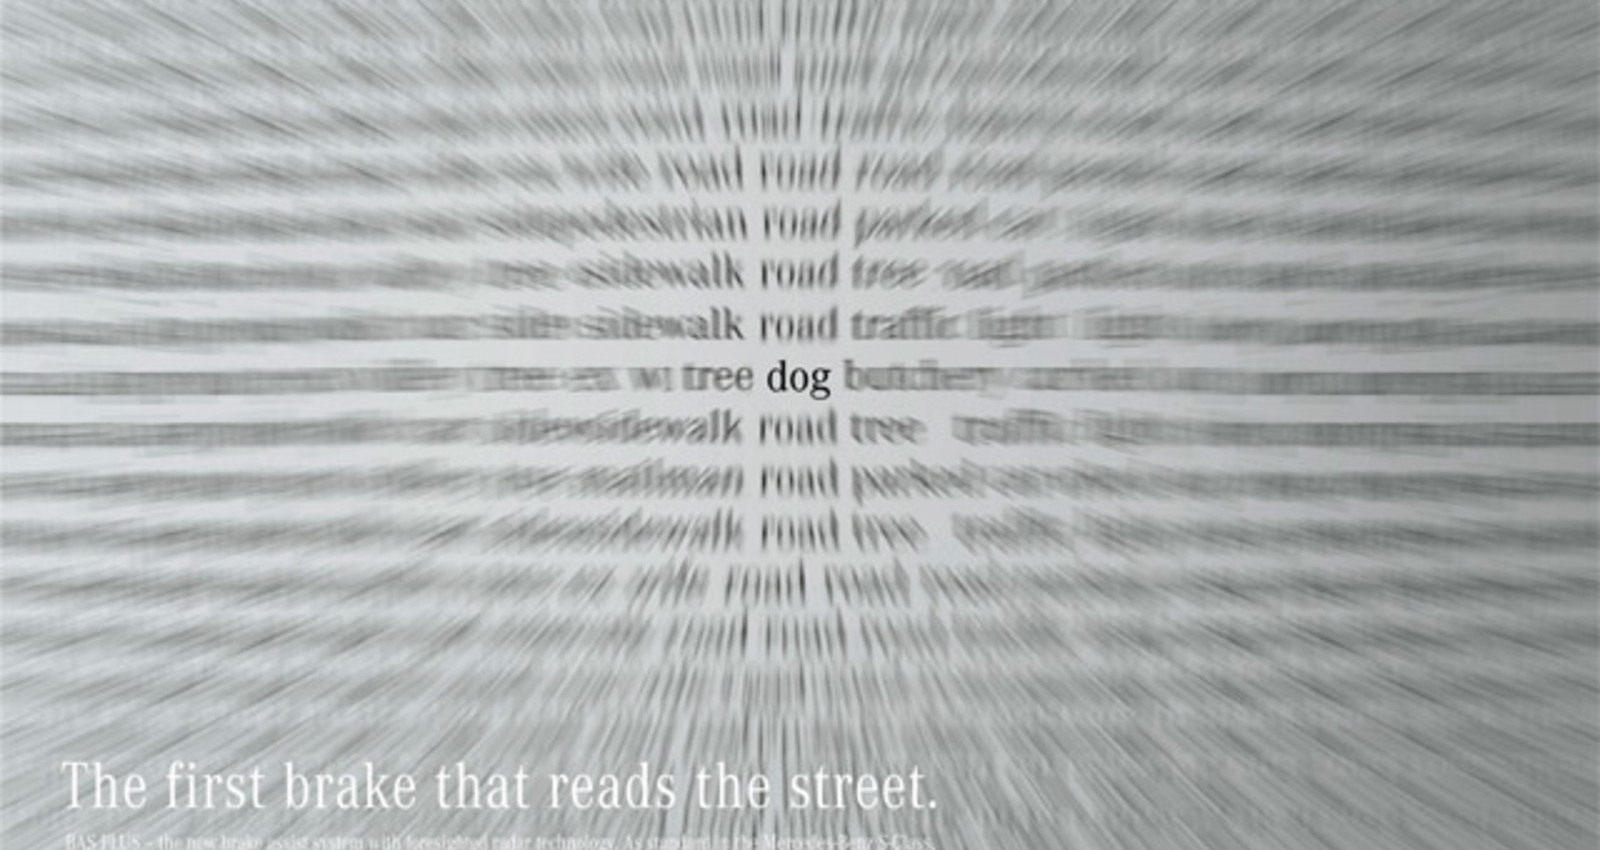 Read the street